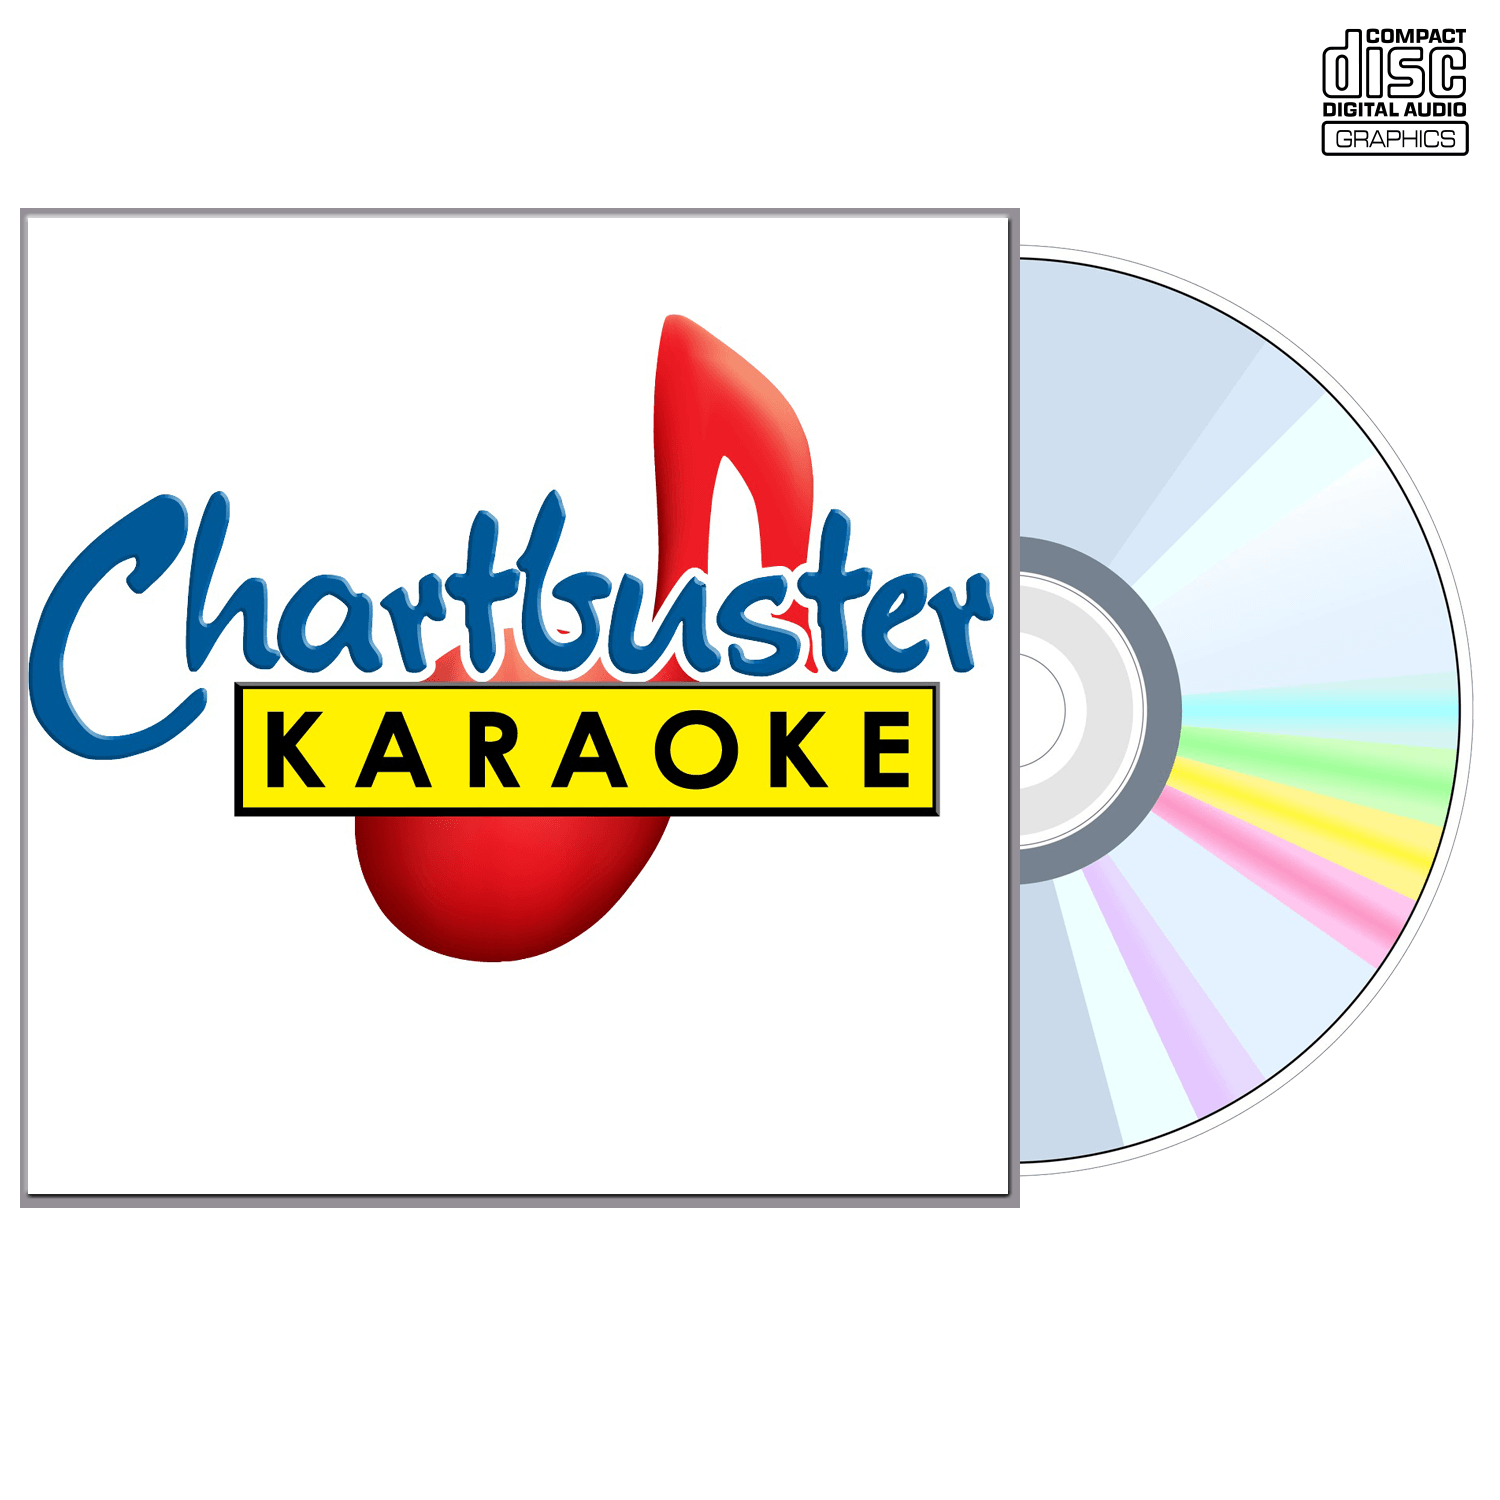 Barenaked Ladies - CD+G - Chartbuster Karaoke - Karaoke Home Entertainment